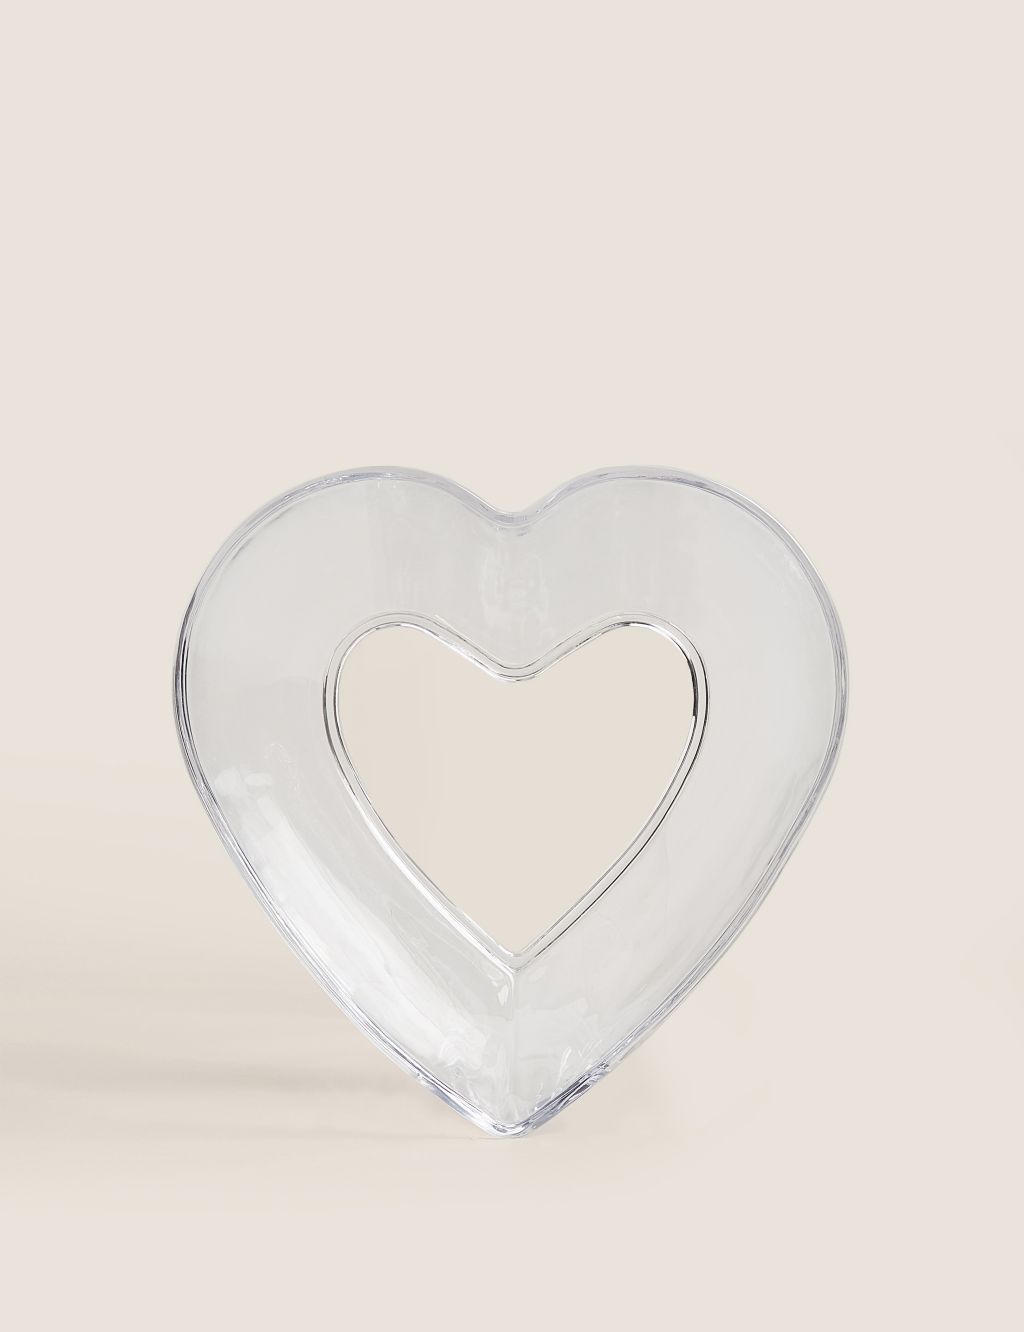 Medium Glass Heart Serving Bowl image 3